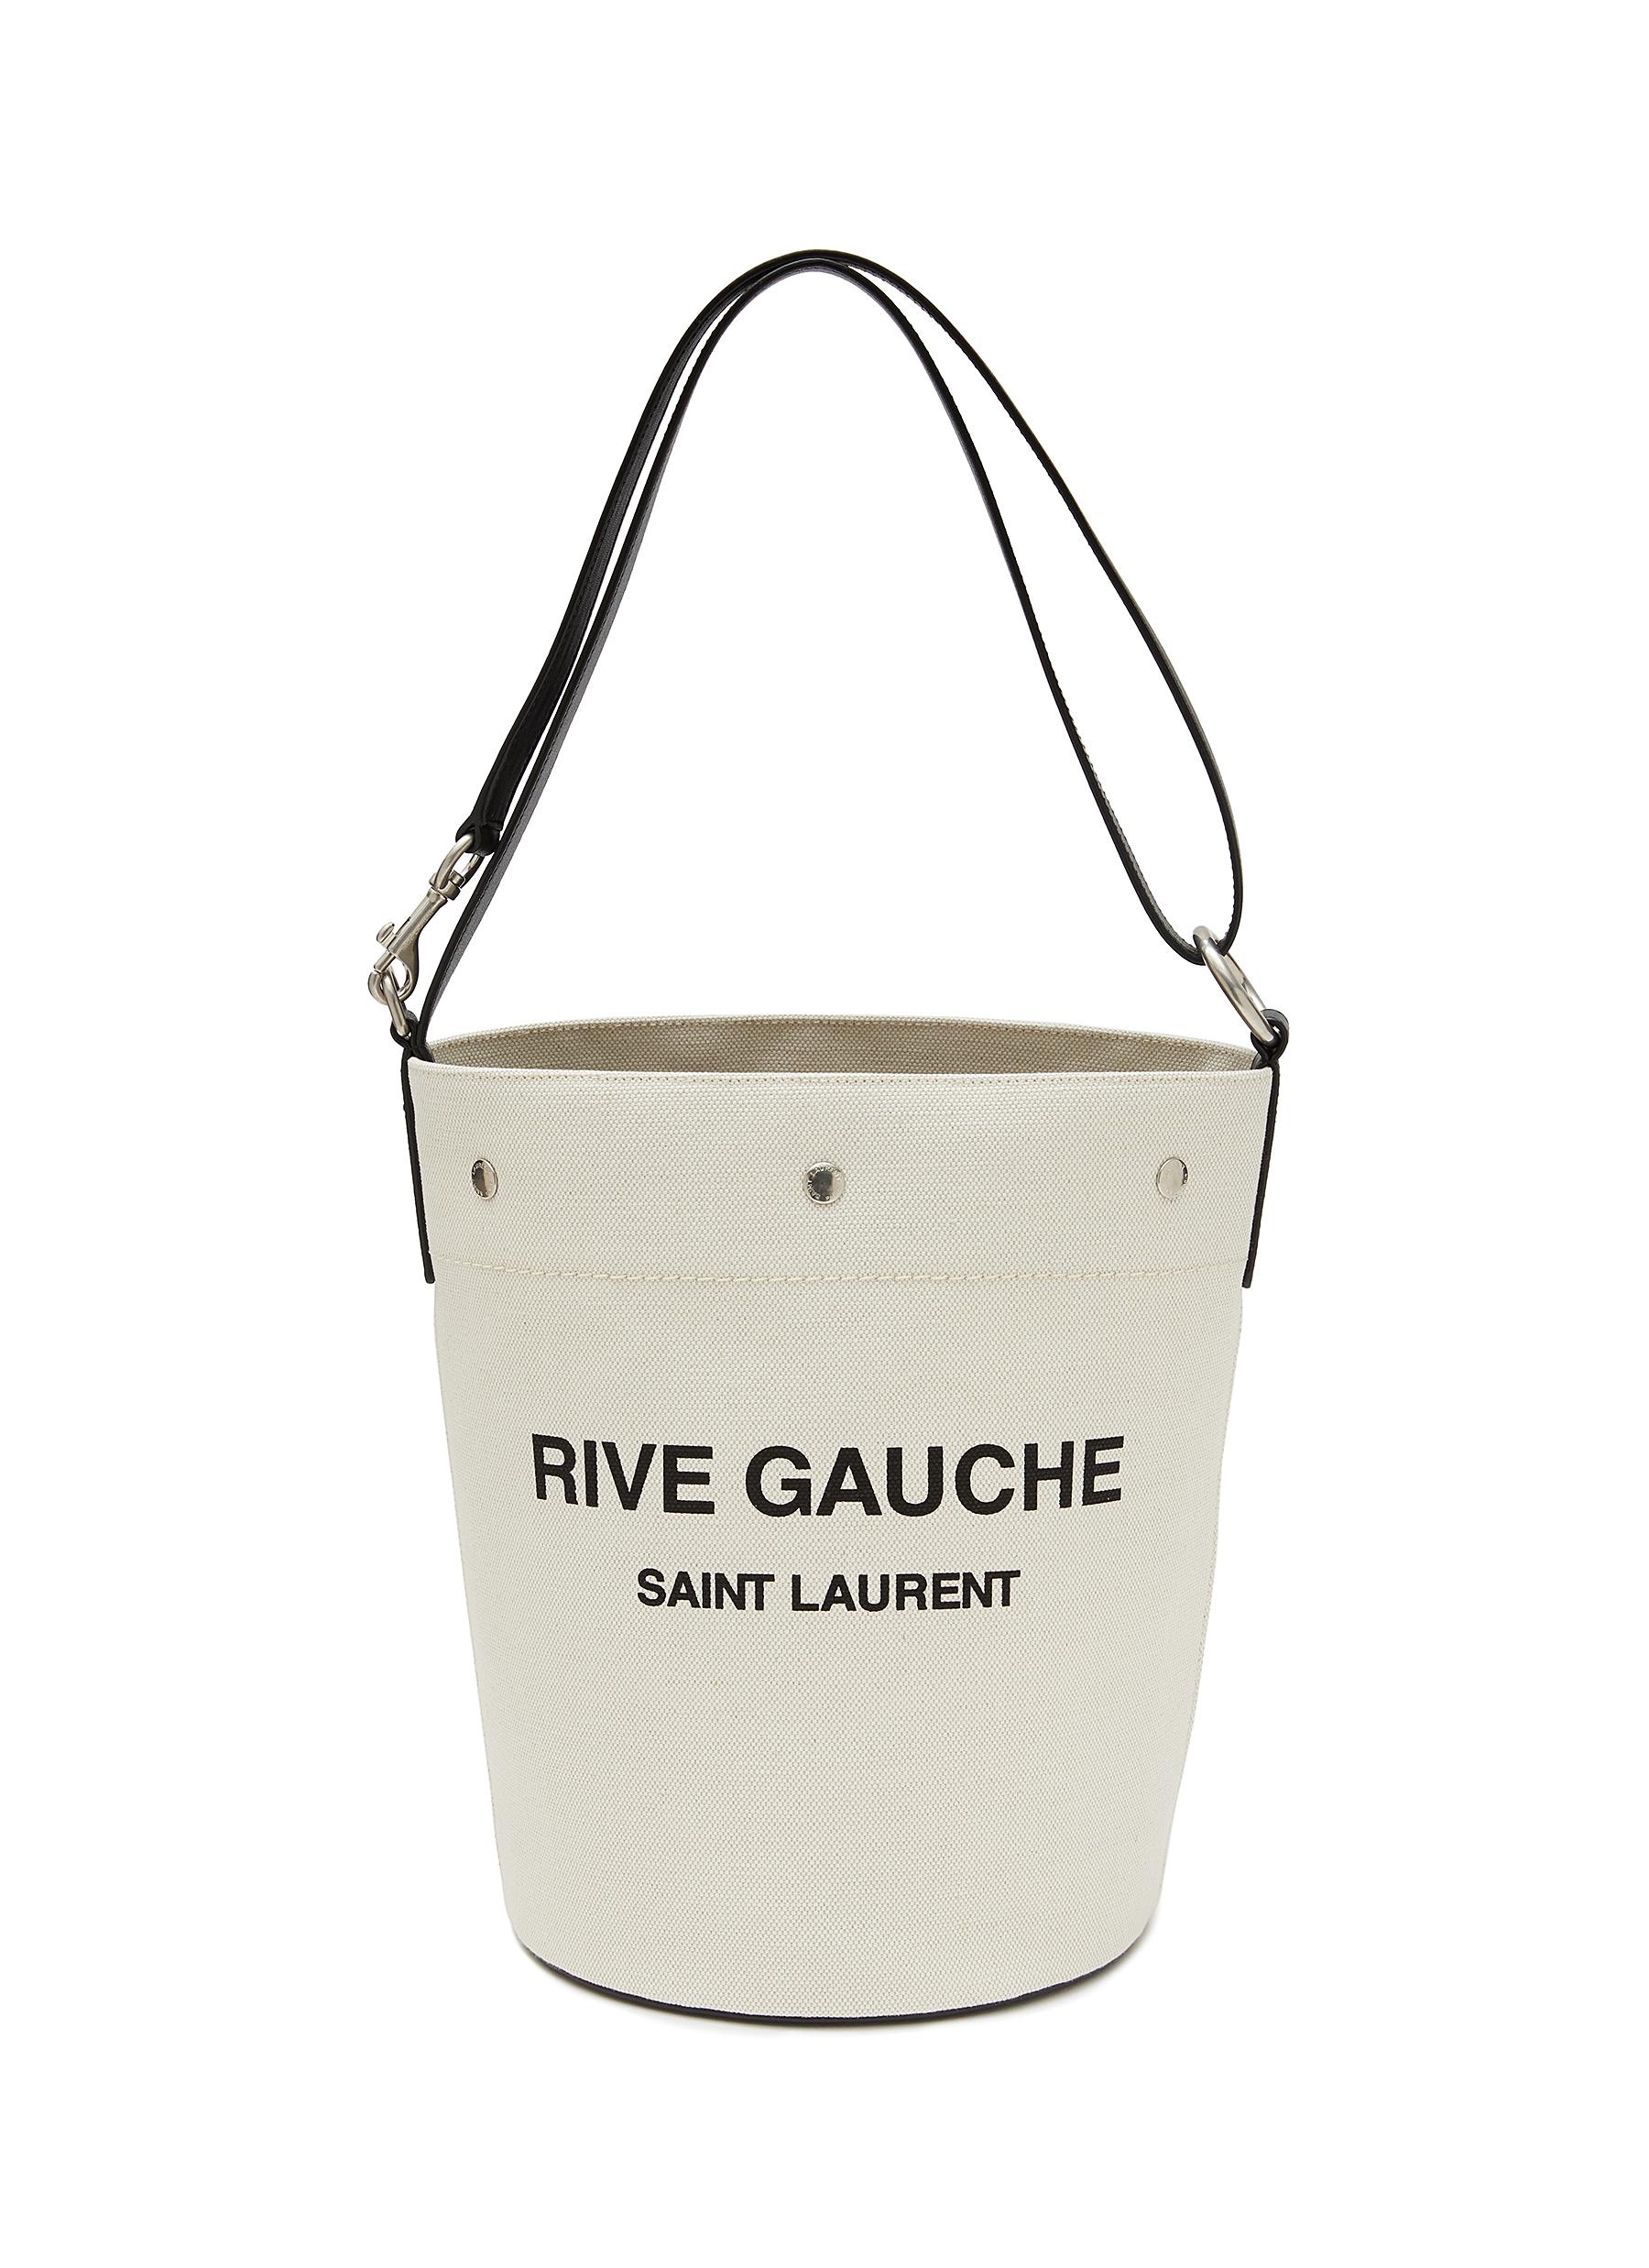 The Saint Laurent Rive Gauche bucket bag is an amazing everyday